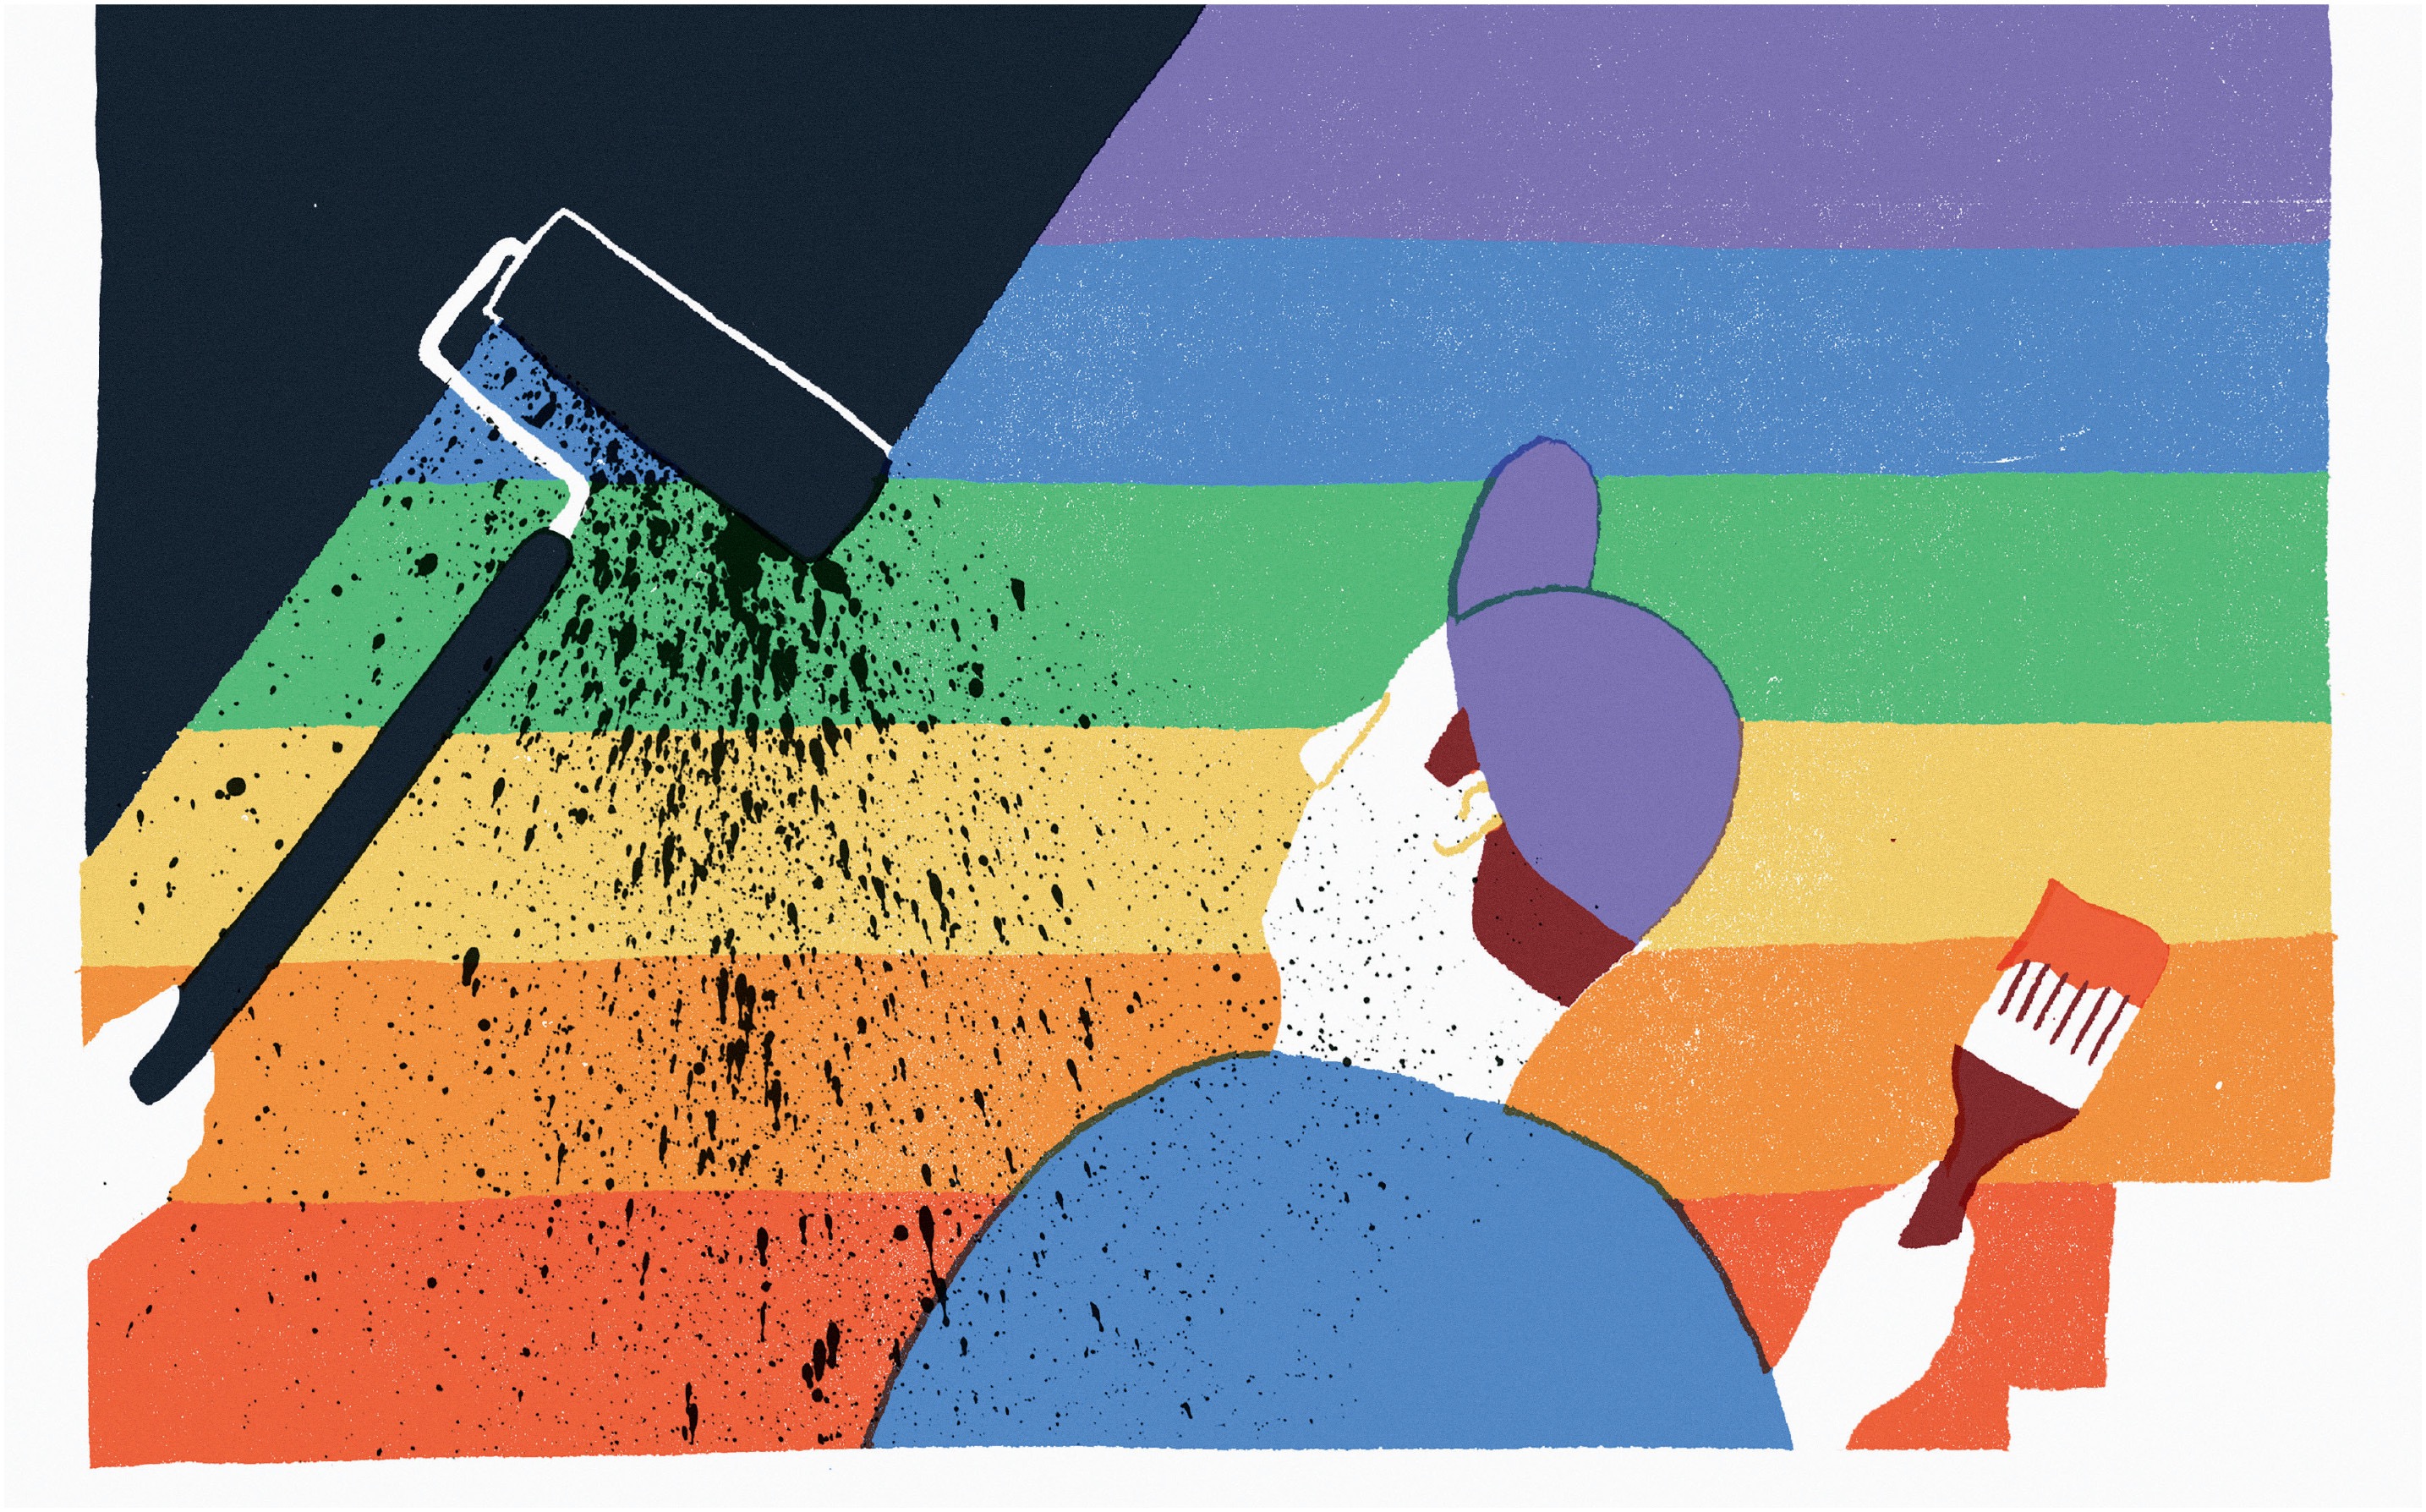 Azerbaycan’da queer öğrencilerin yaşamı tehdit altında | Kaos GL - LGBTİ+ Haber Portalı Haber